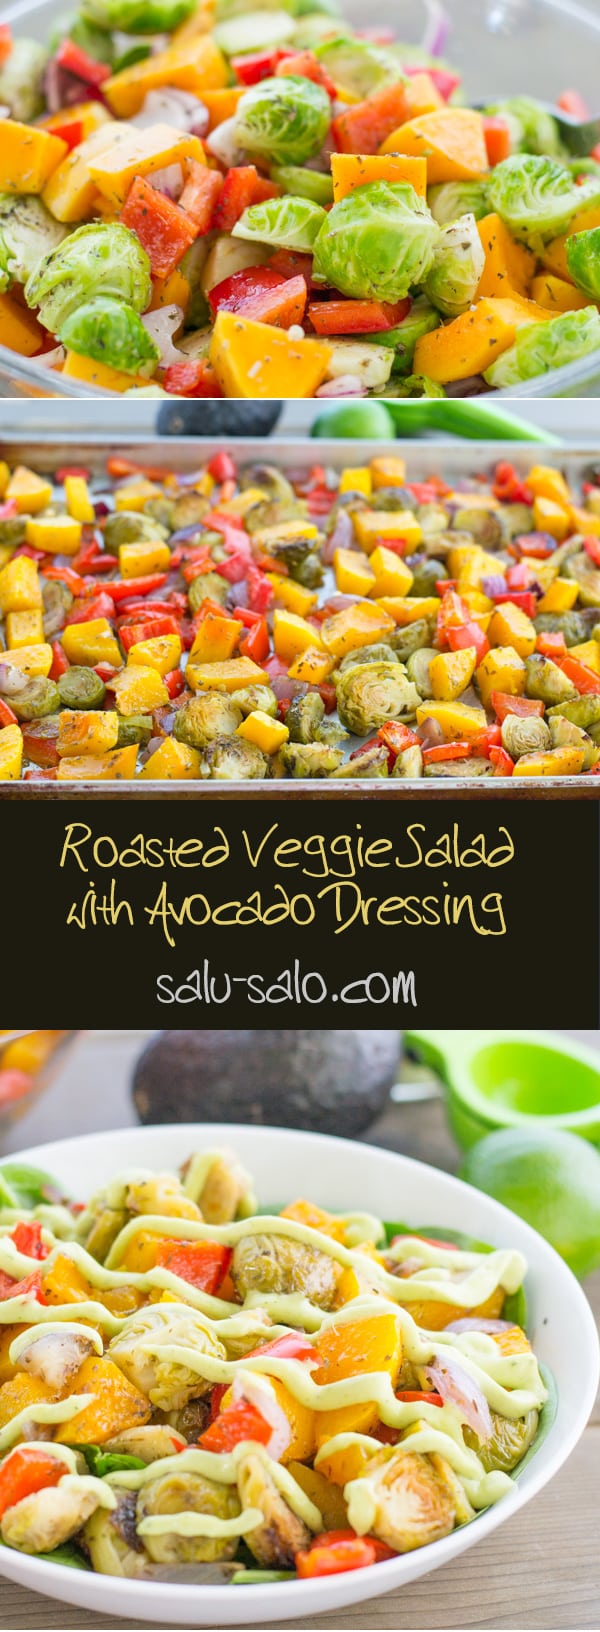 Roasted Veggie Salad with Avocado Dressing